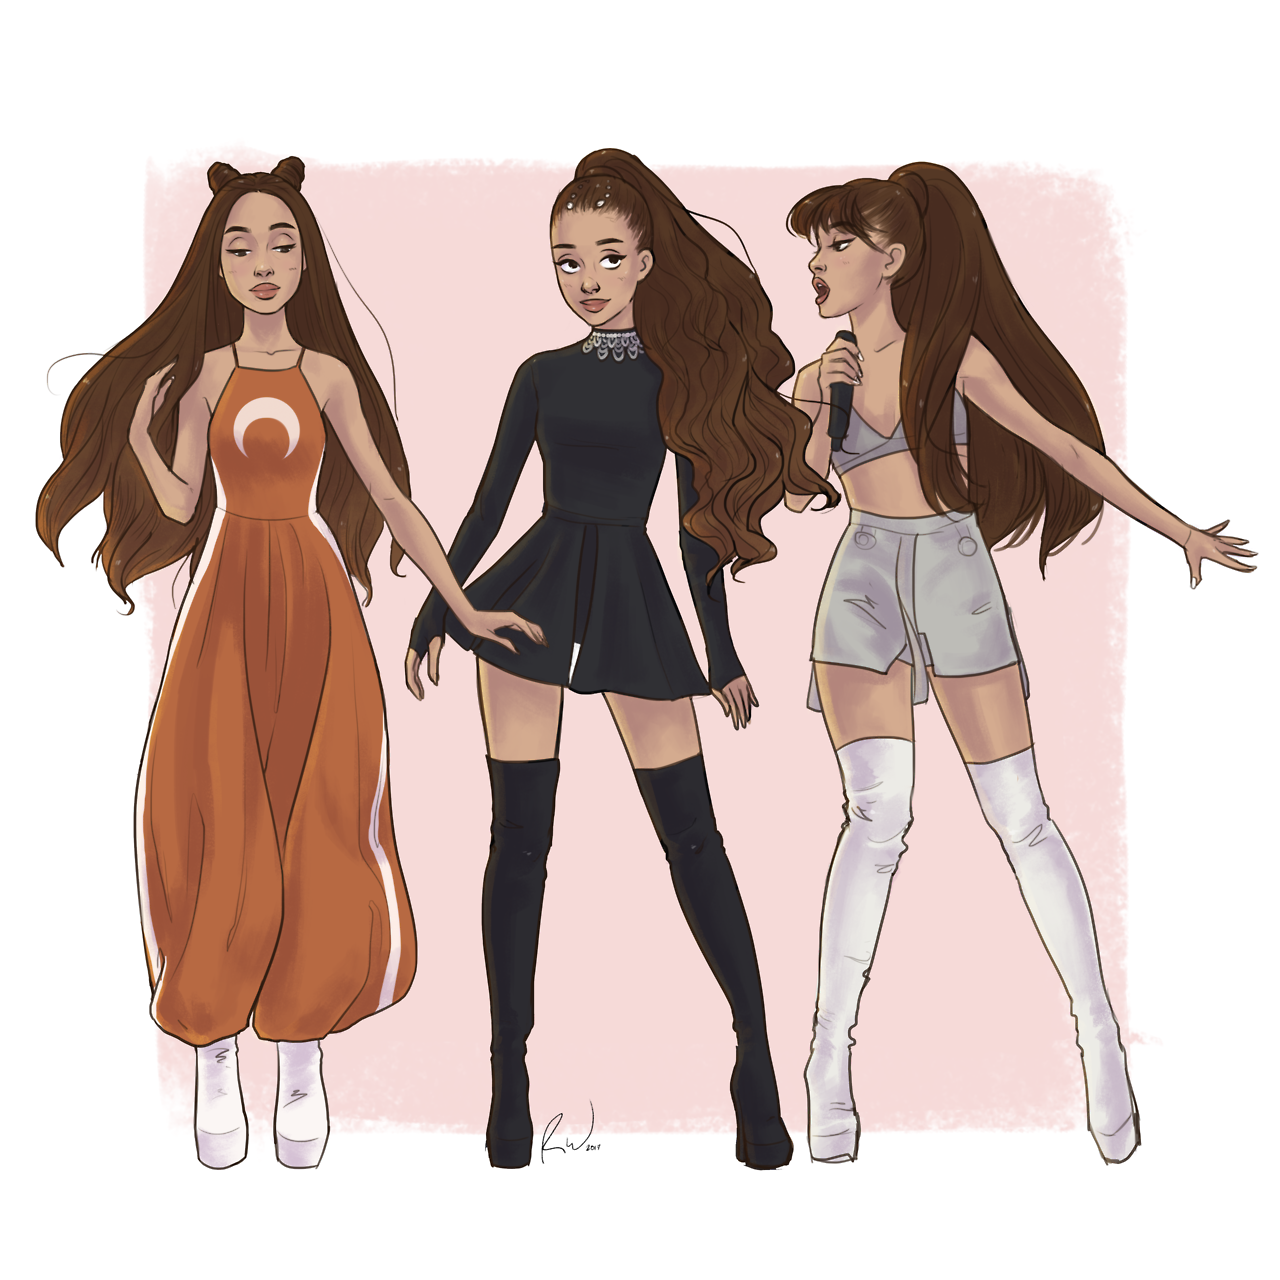 Ariana Grande Dangerous Woman Outfit Ariana Grande Songs - dangerous woman tour free outfits roblox